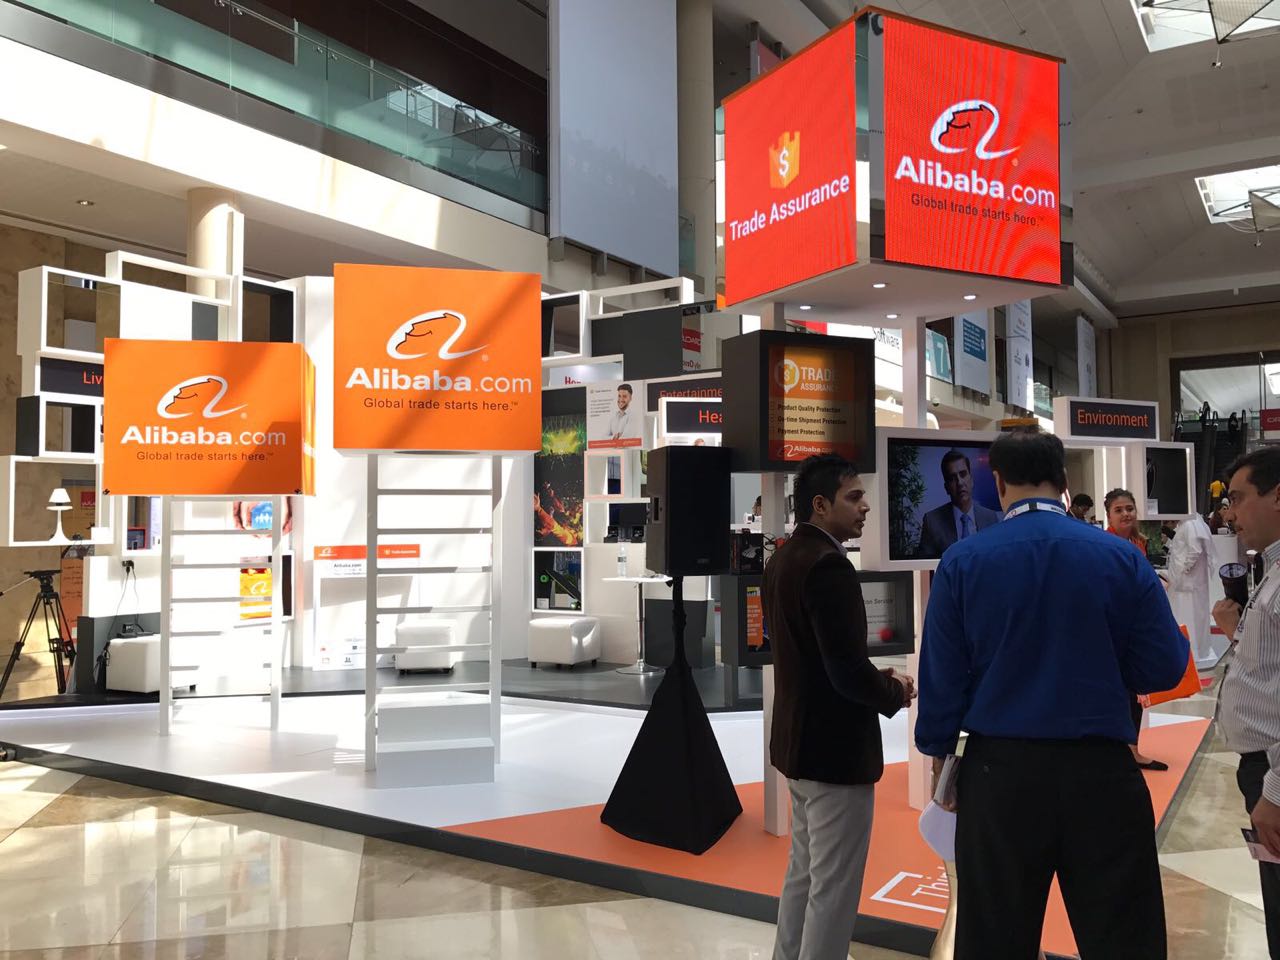 Alibaba.com showcases Trade Assurance at GITEX 2016